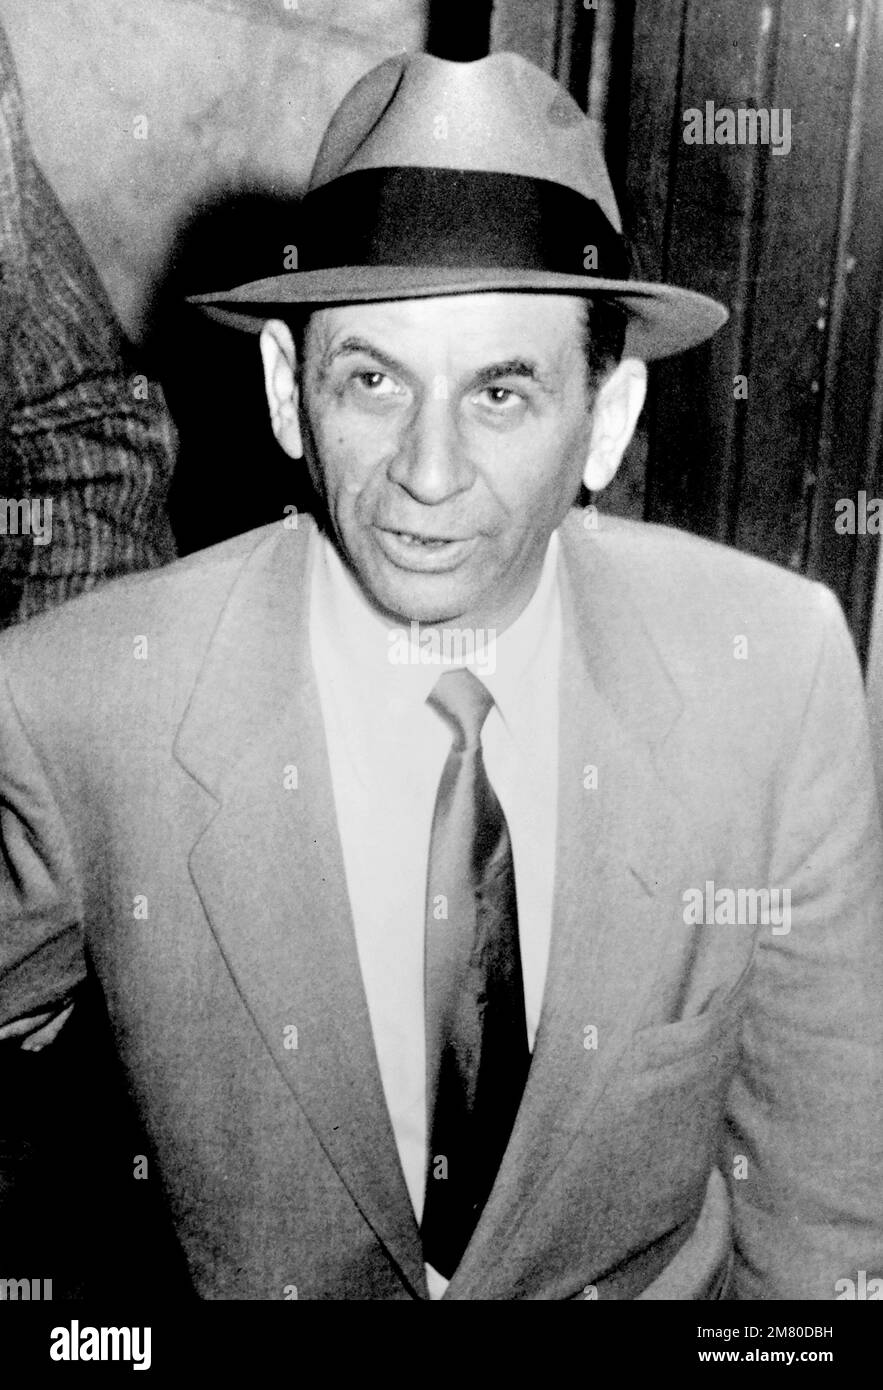 Meyer Lansky. Photograph of the American organized crime figure, nicknamed the 'Mobs Accountaint', Meyer Lansky (b. Maier Suchowljansky, 1902-1983) by Orlando Fernandez, 1958 Stock Photo